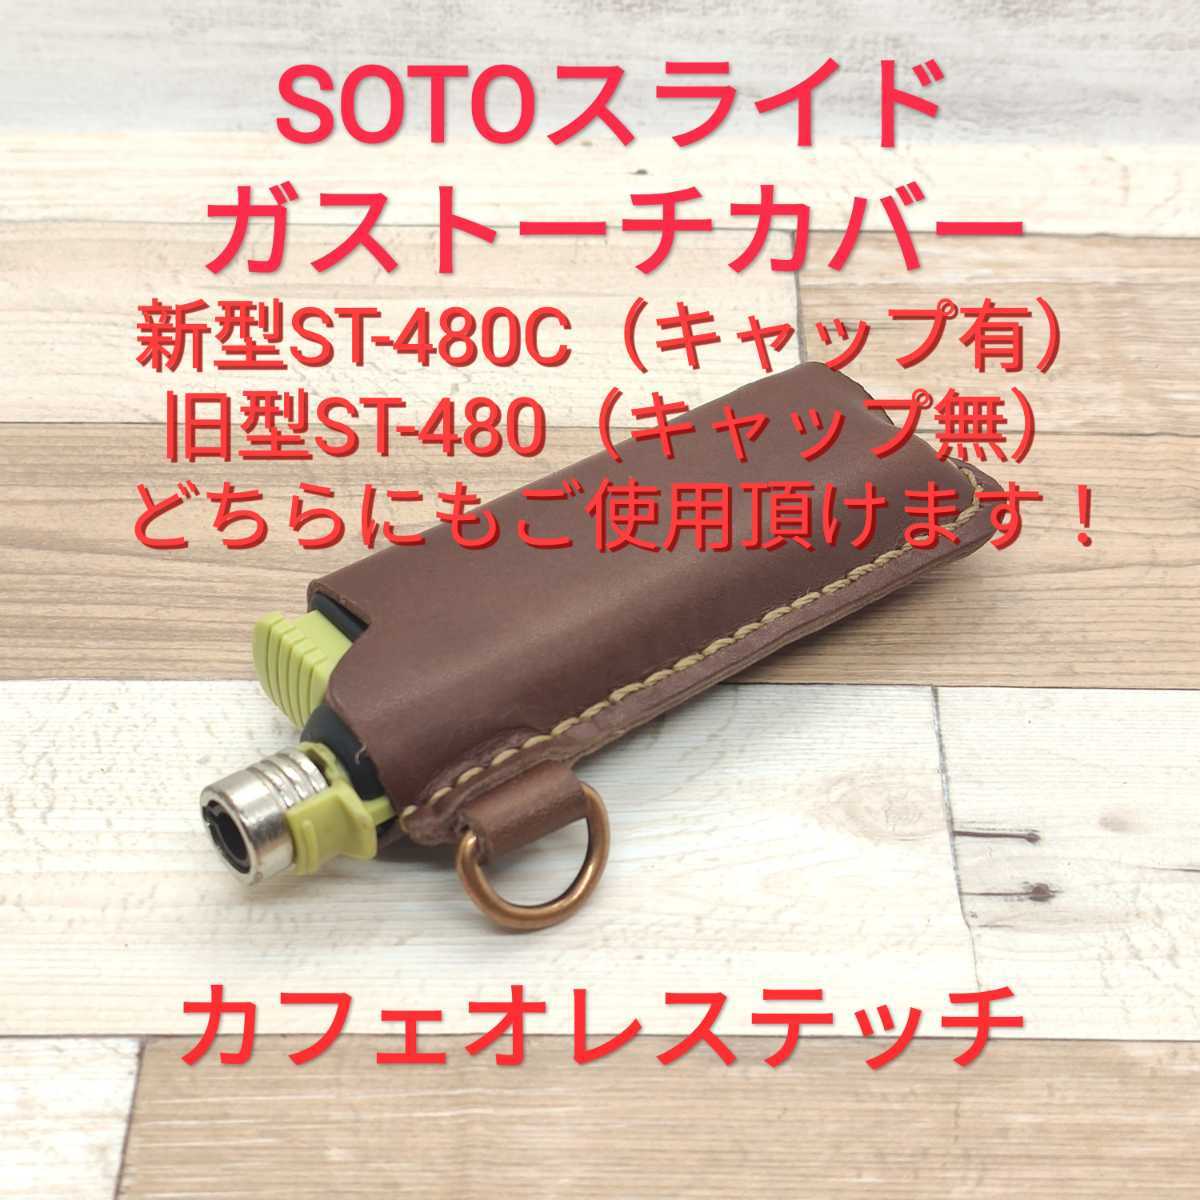  finest quality material SOTO sliding gas torch cover Brown × cafe au lait stitch 